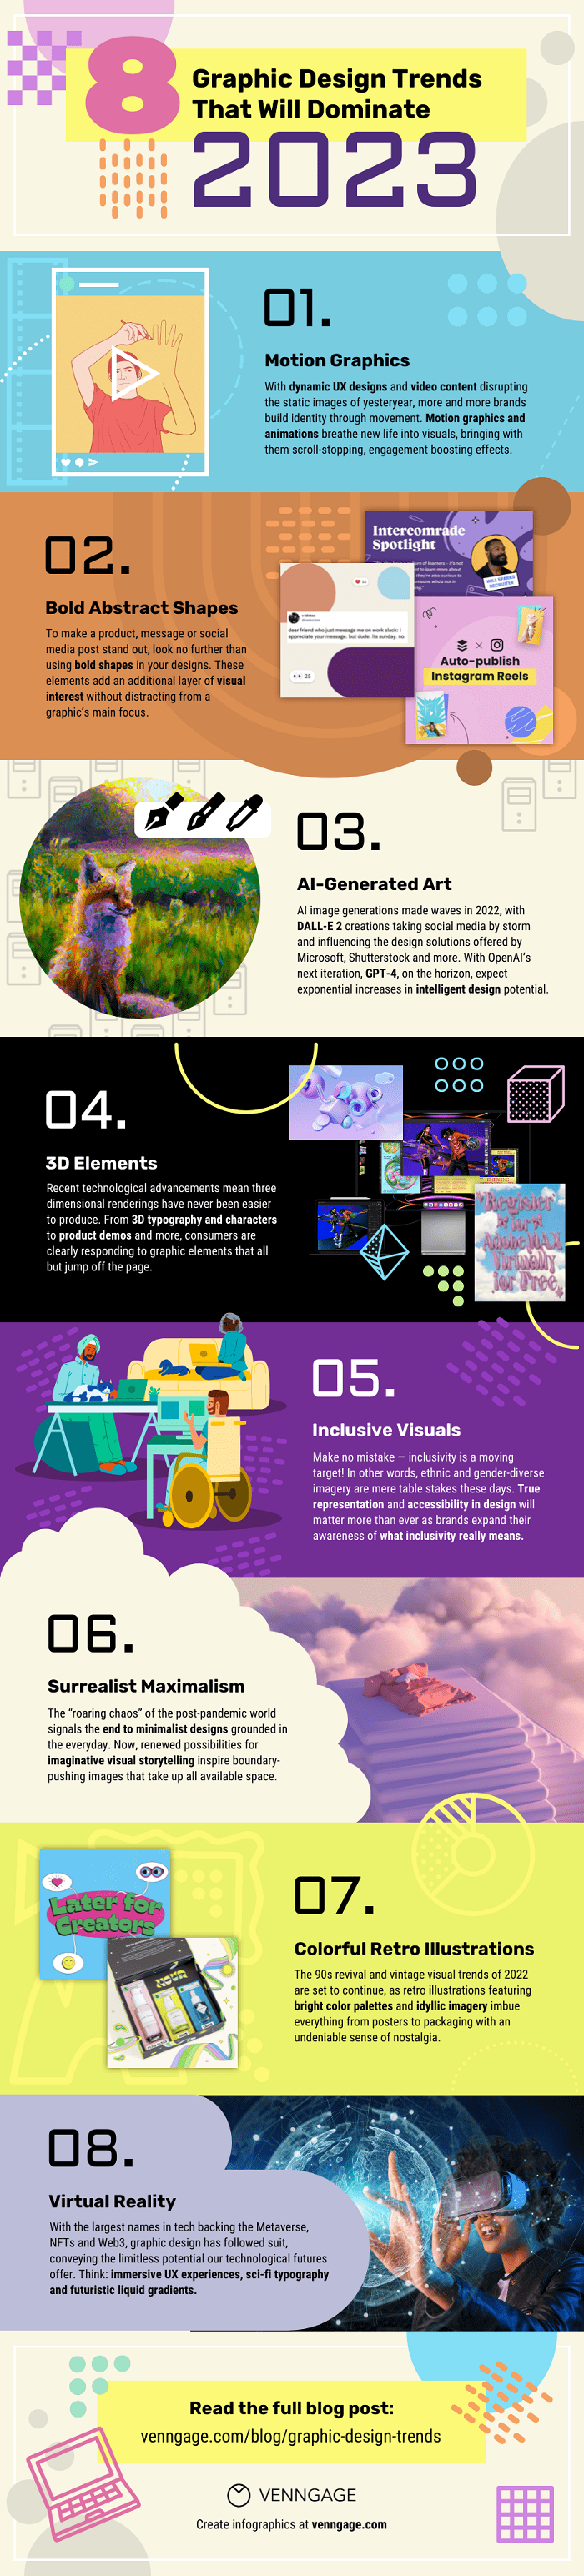 Graphic Design Trends infographic